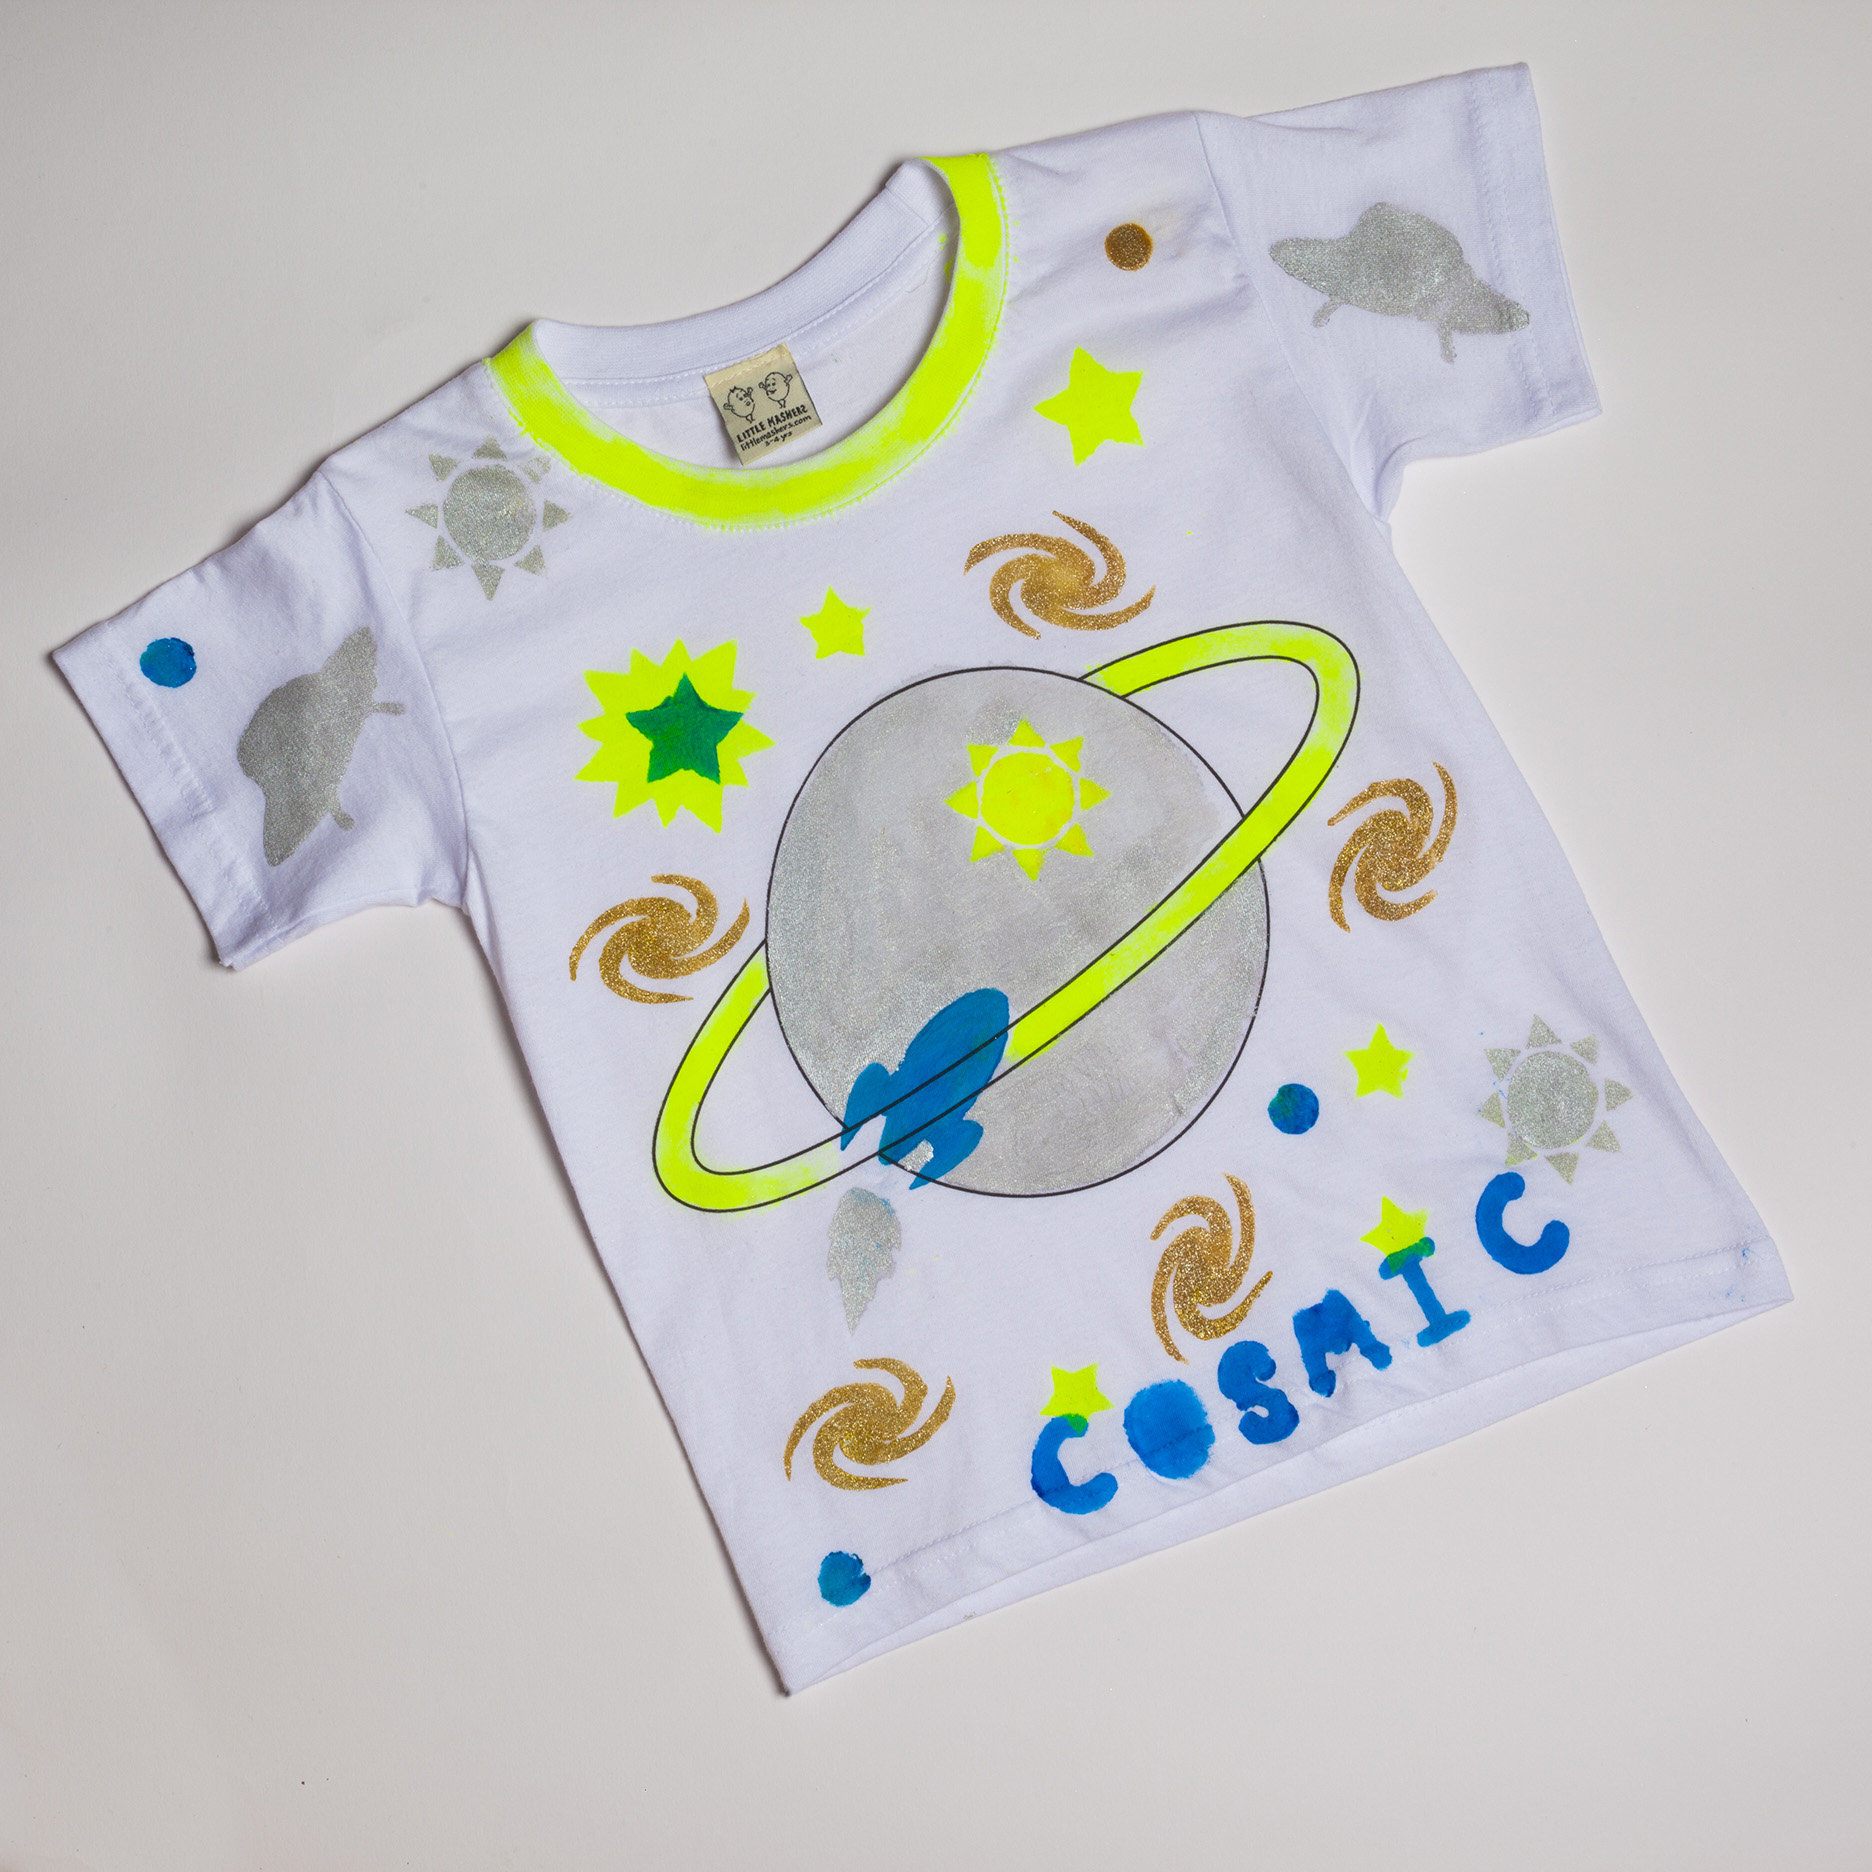                                                                                                                                                                       T-Shirt Creator Kit Space